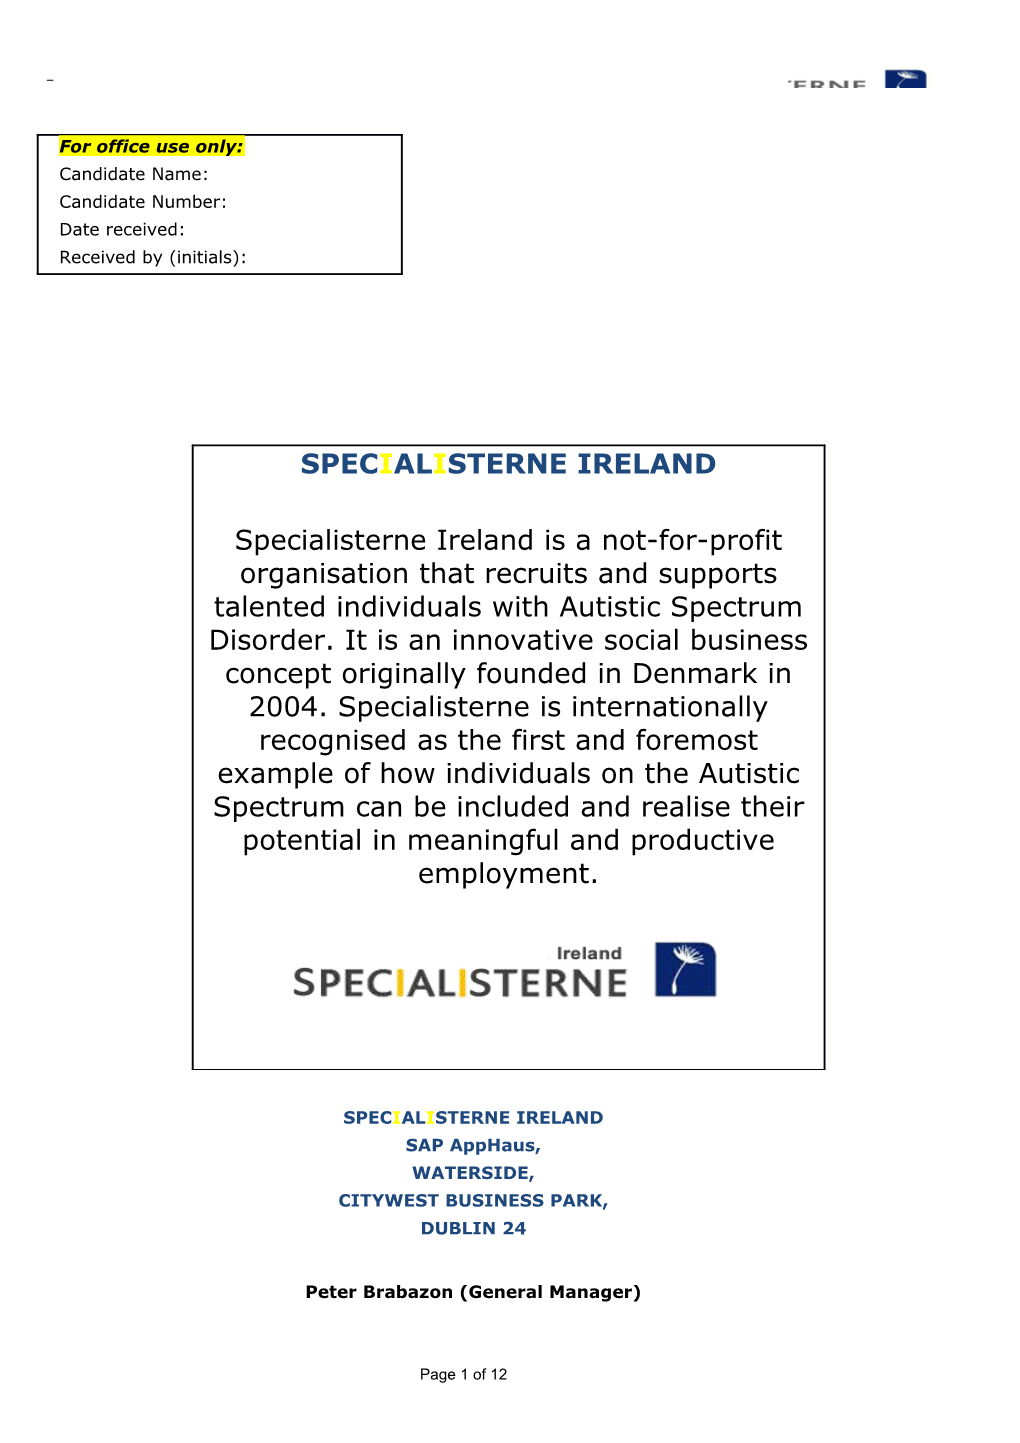 Specialisterne Ireland